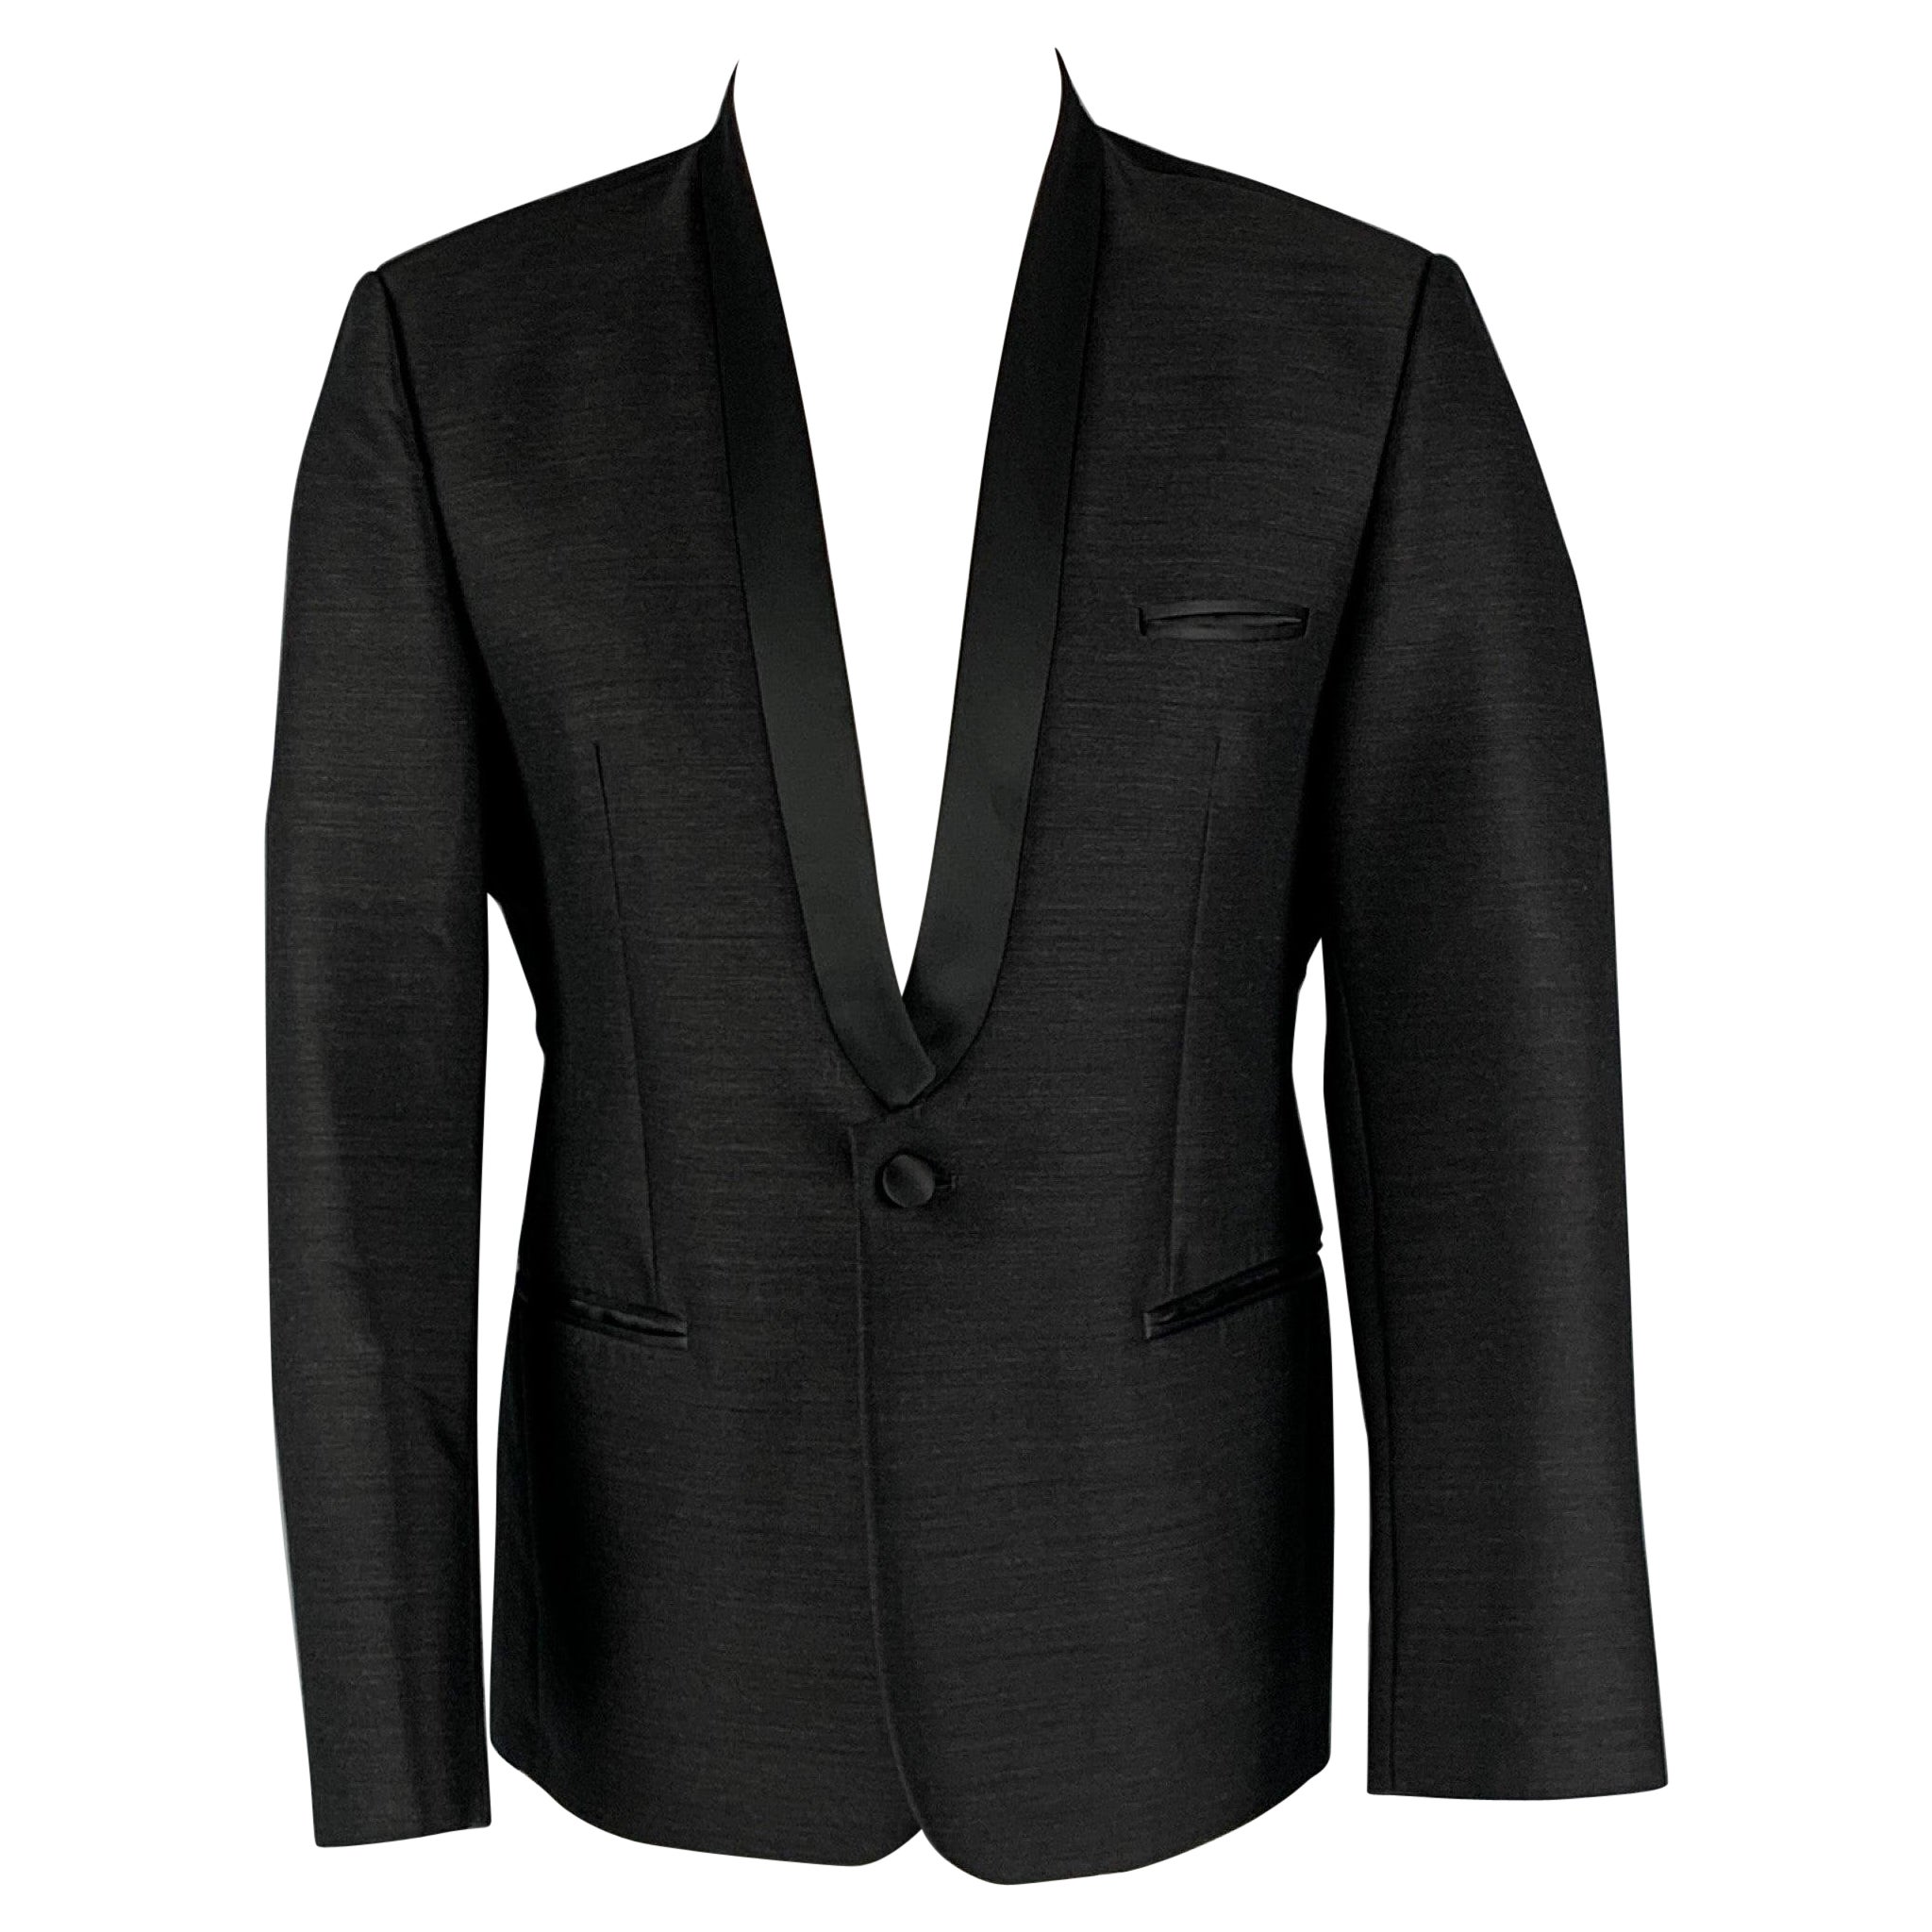 EMPORIO ARMANI Size 40 Black Solid Wool Blend Shawl Collar Sport Coat